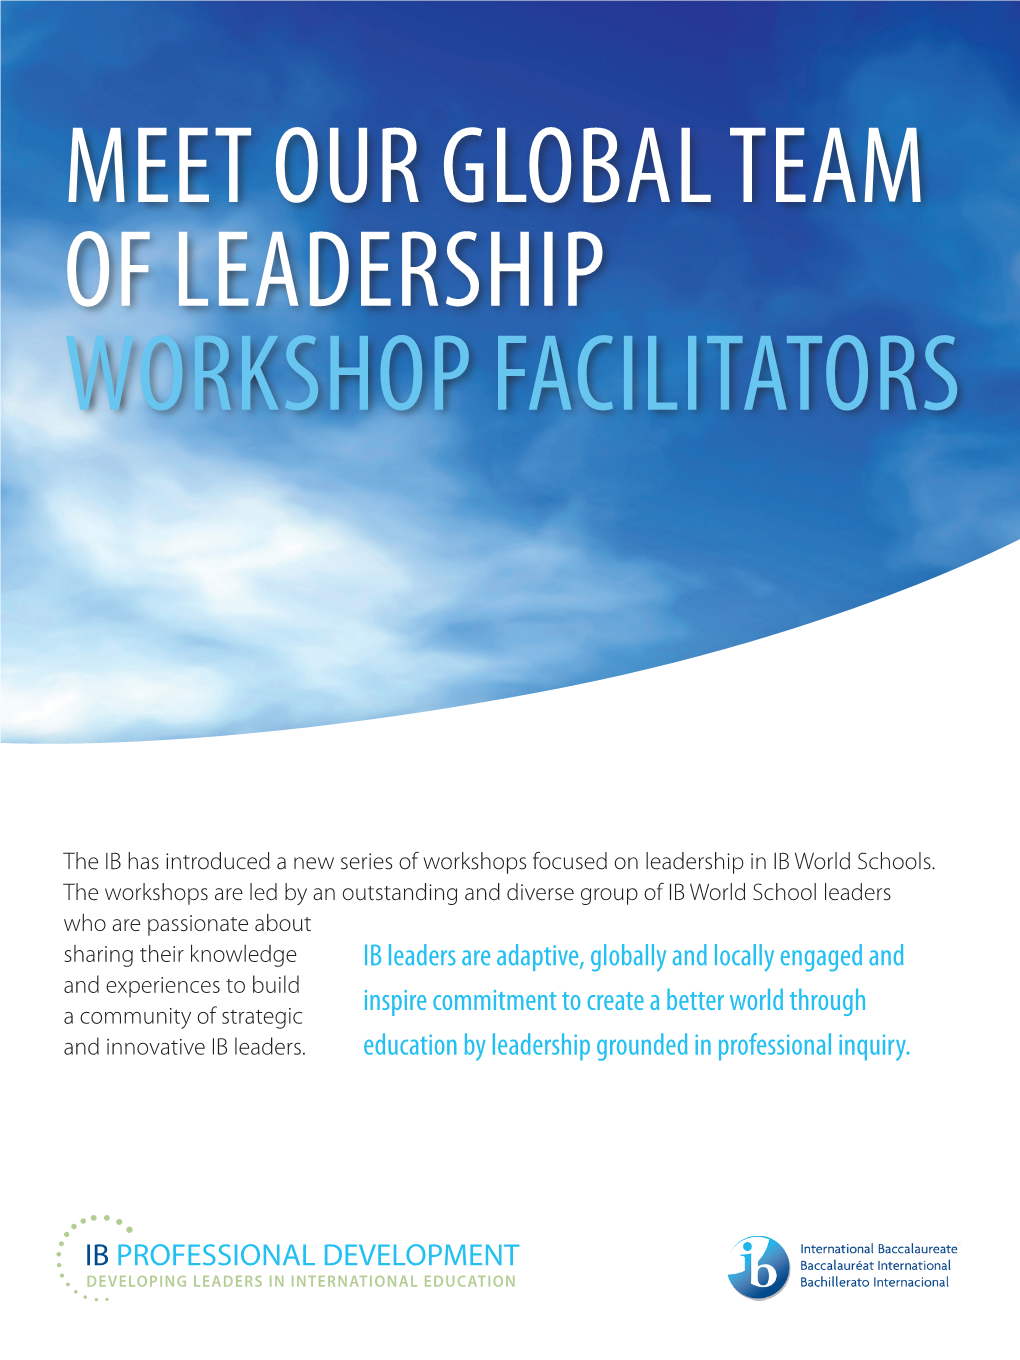 Meet Our Global Team of Leadership Workshop Facilitators